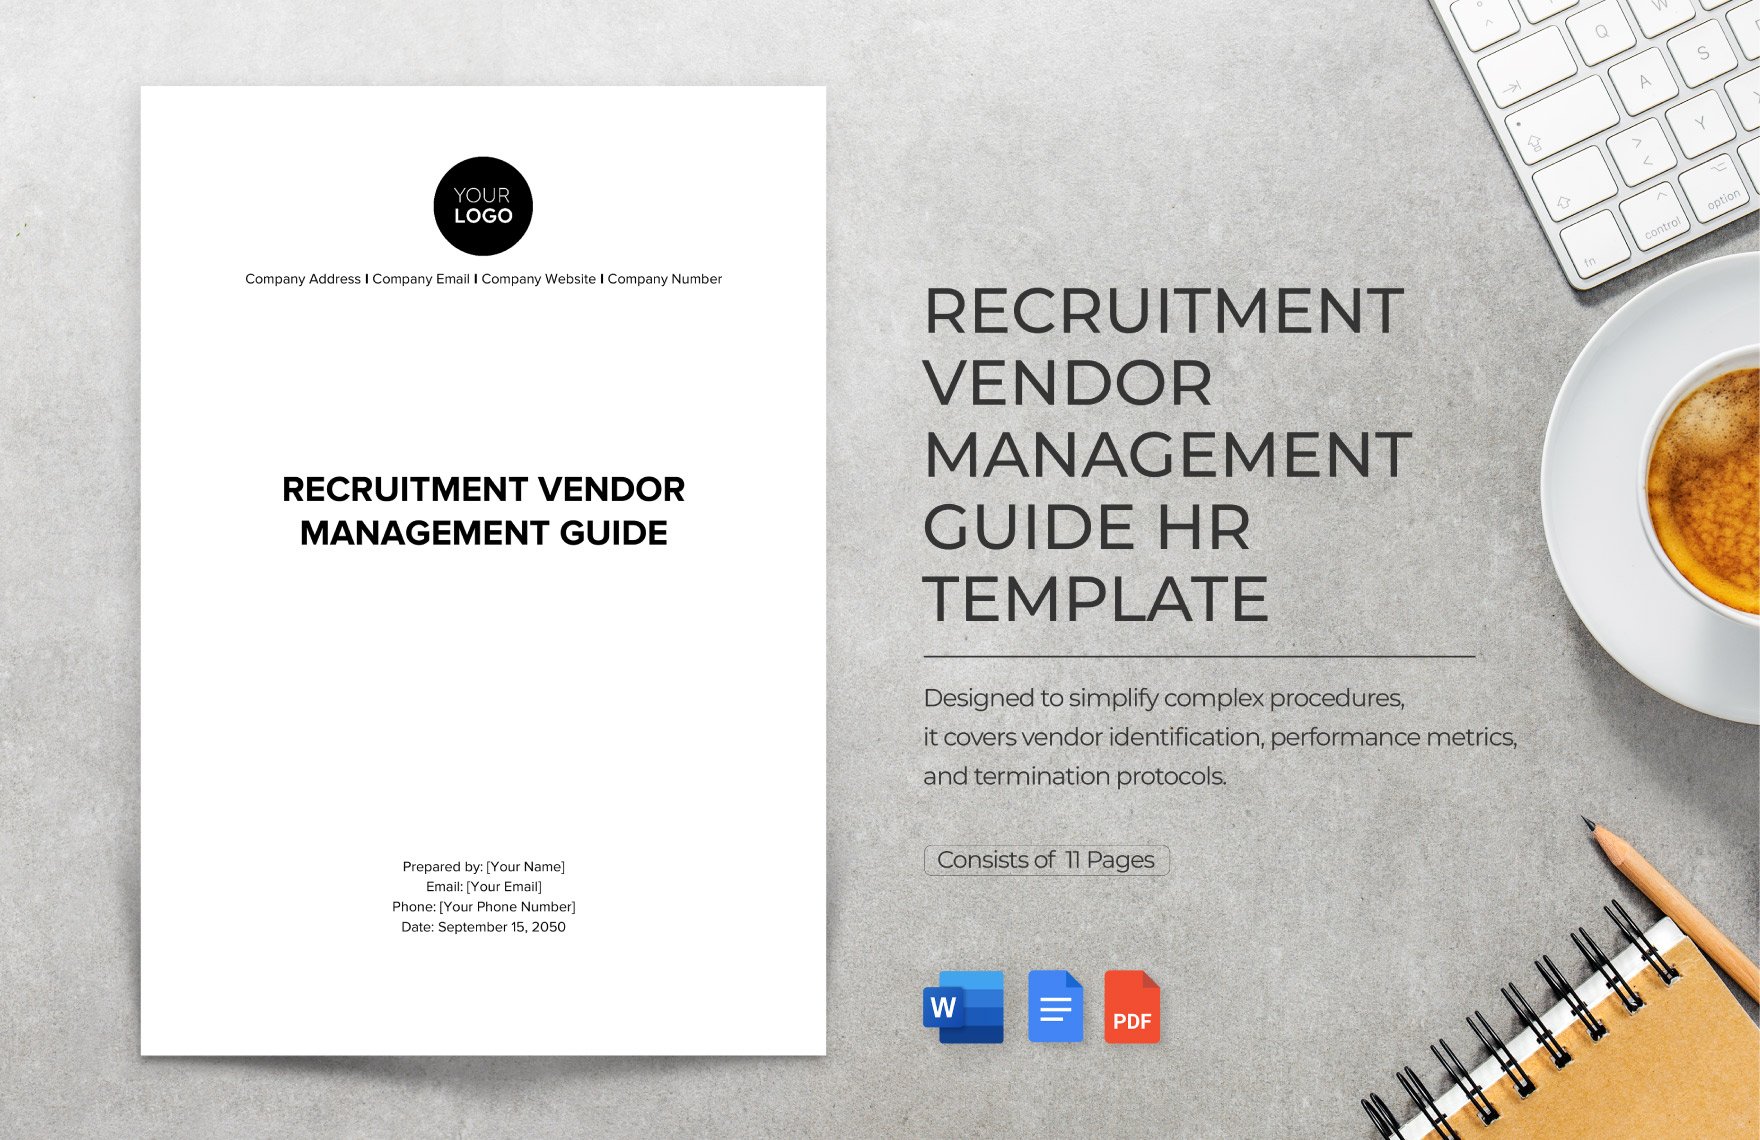 Recruitment Vendor Management Guide HR Template in Word, Google Docs, PDF